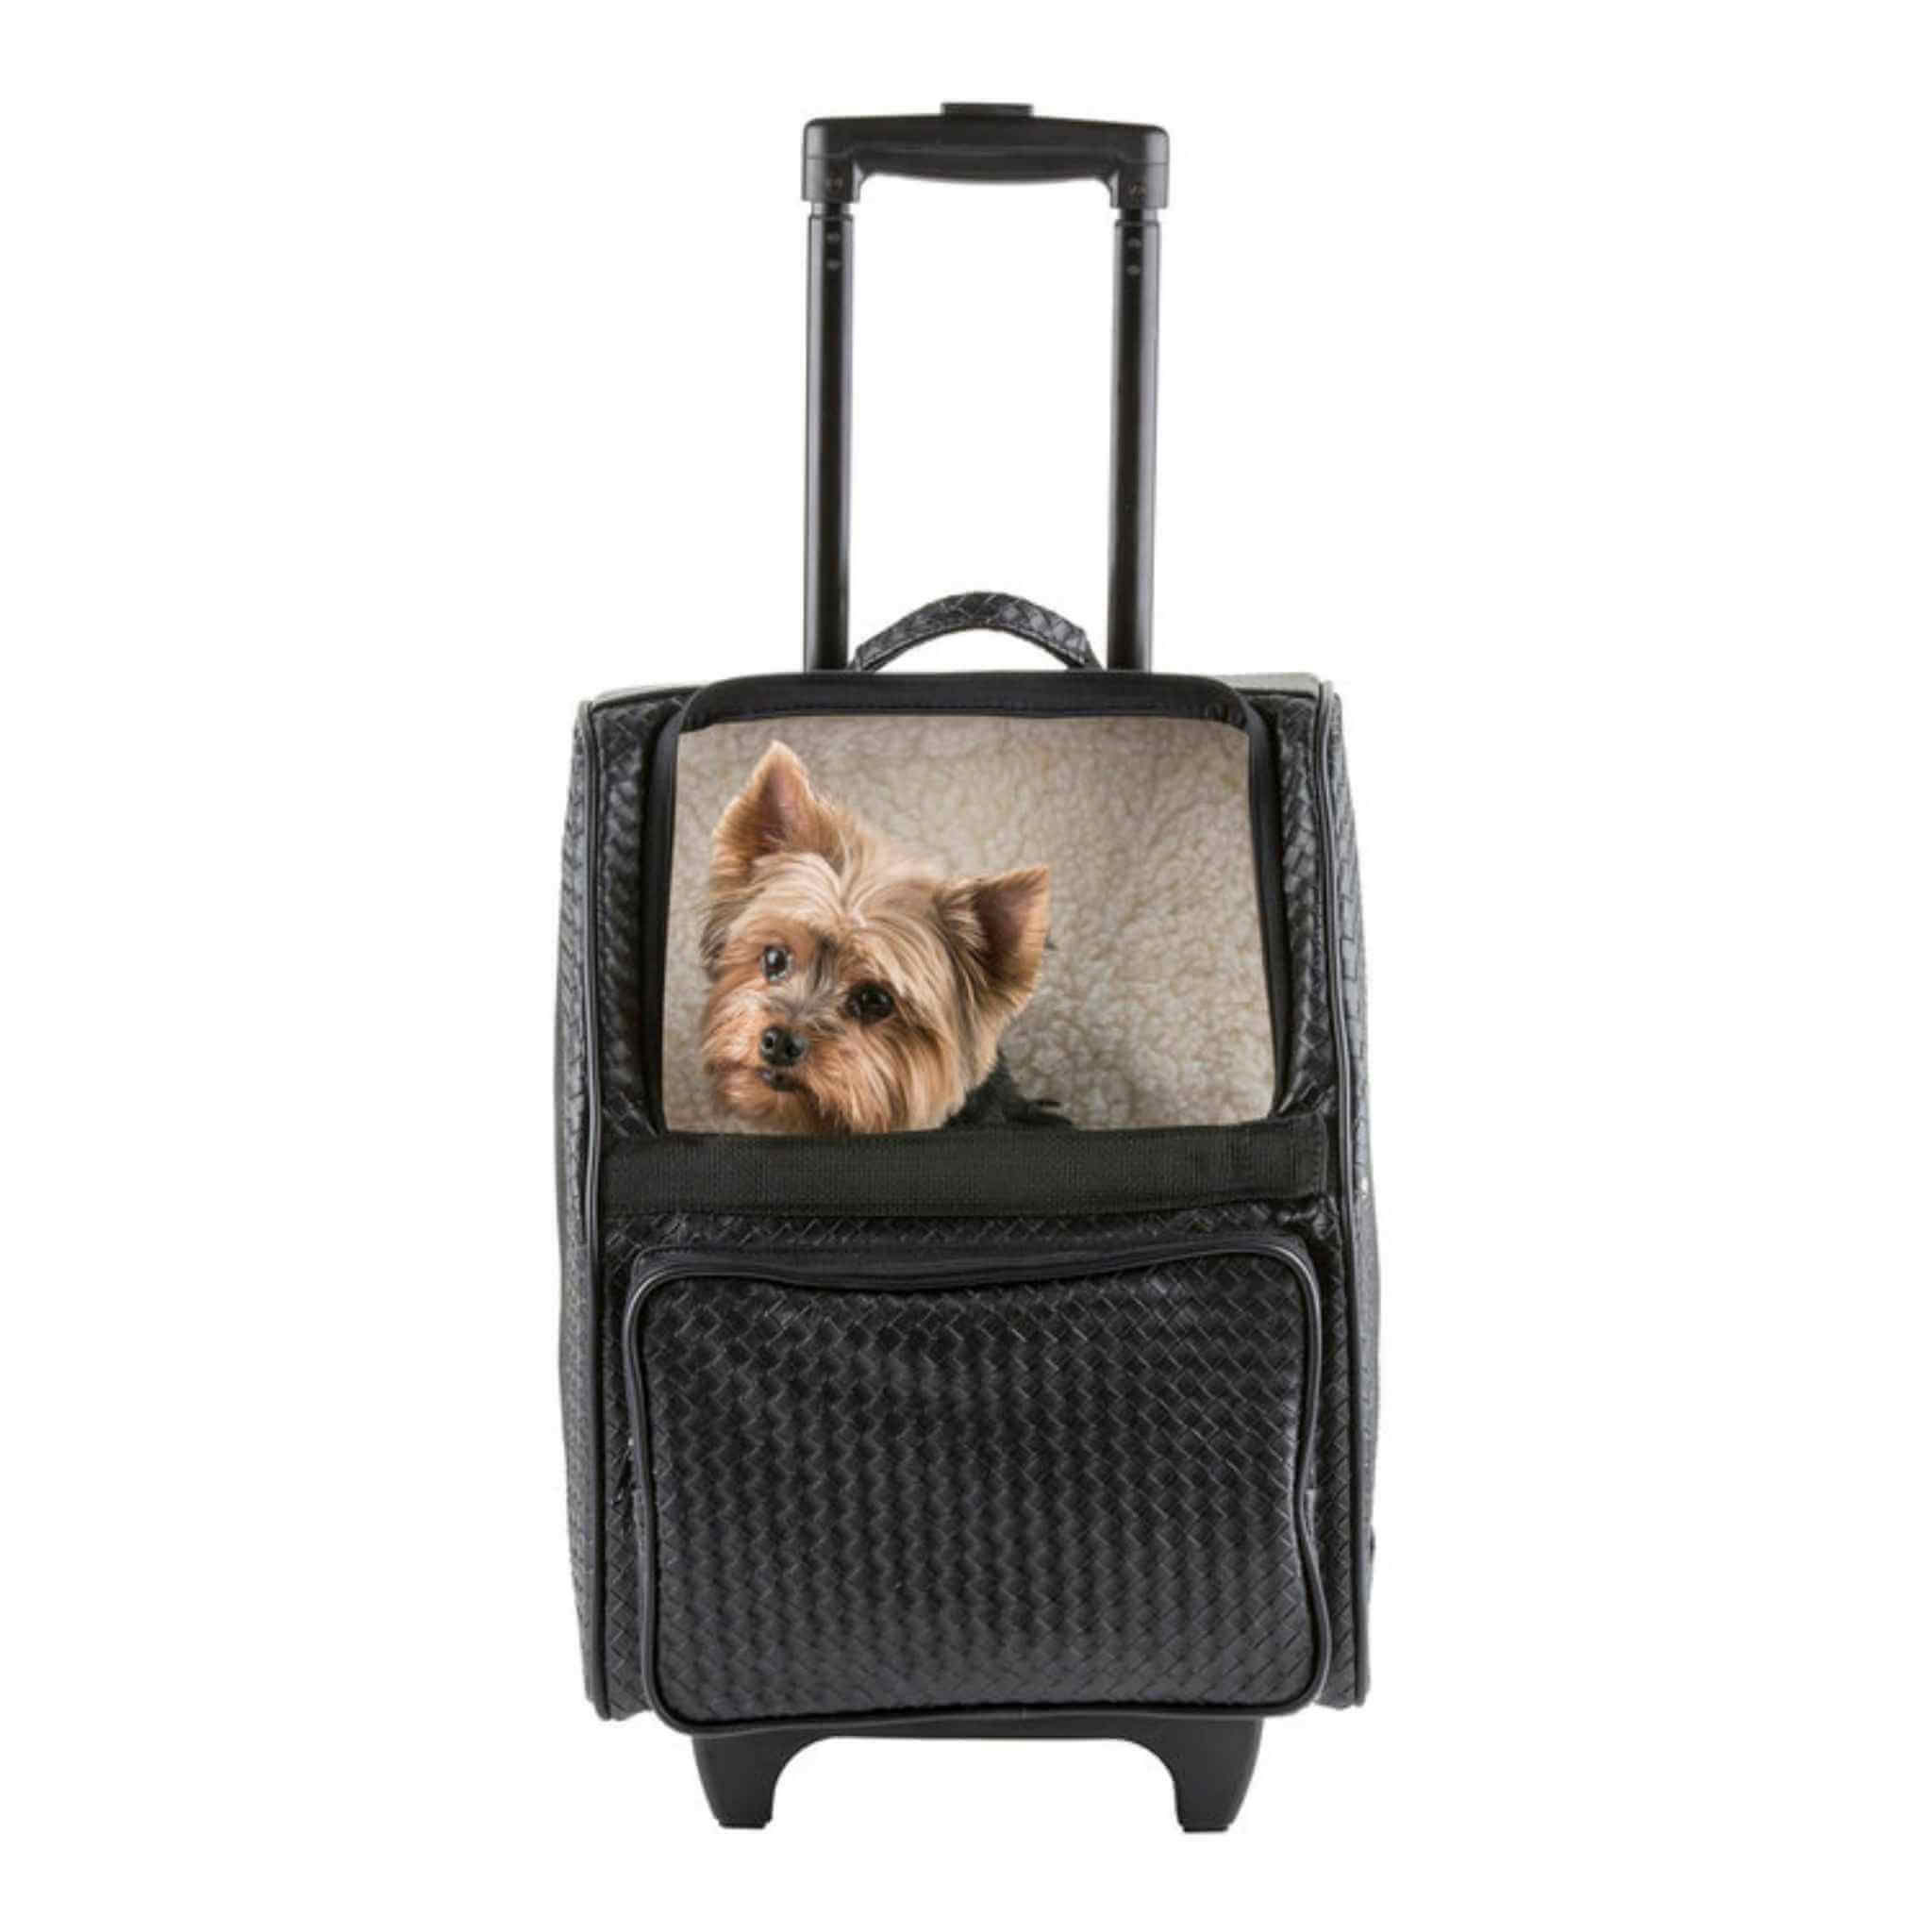 PETOTE Marlee 2 Bag Airline Approved Travel Dog Carrier — Pink